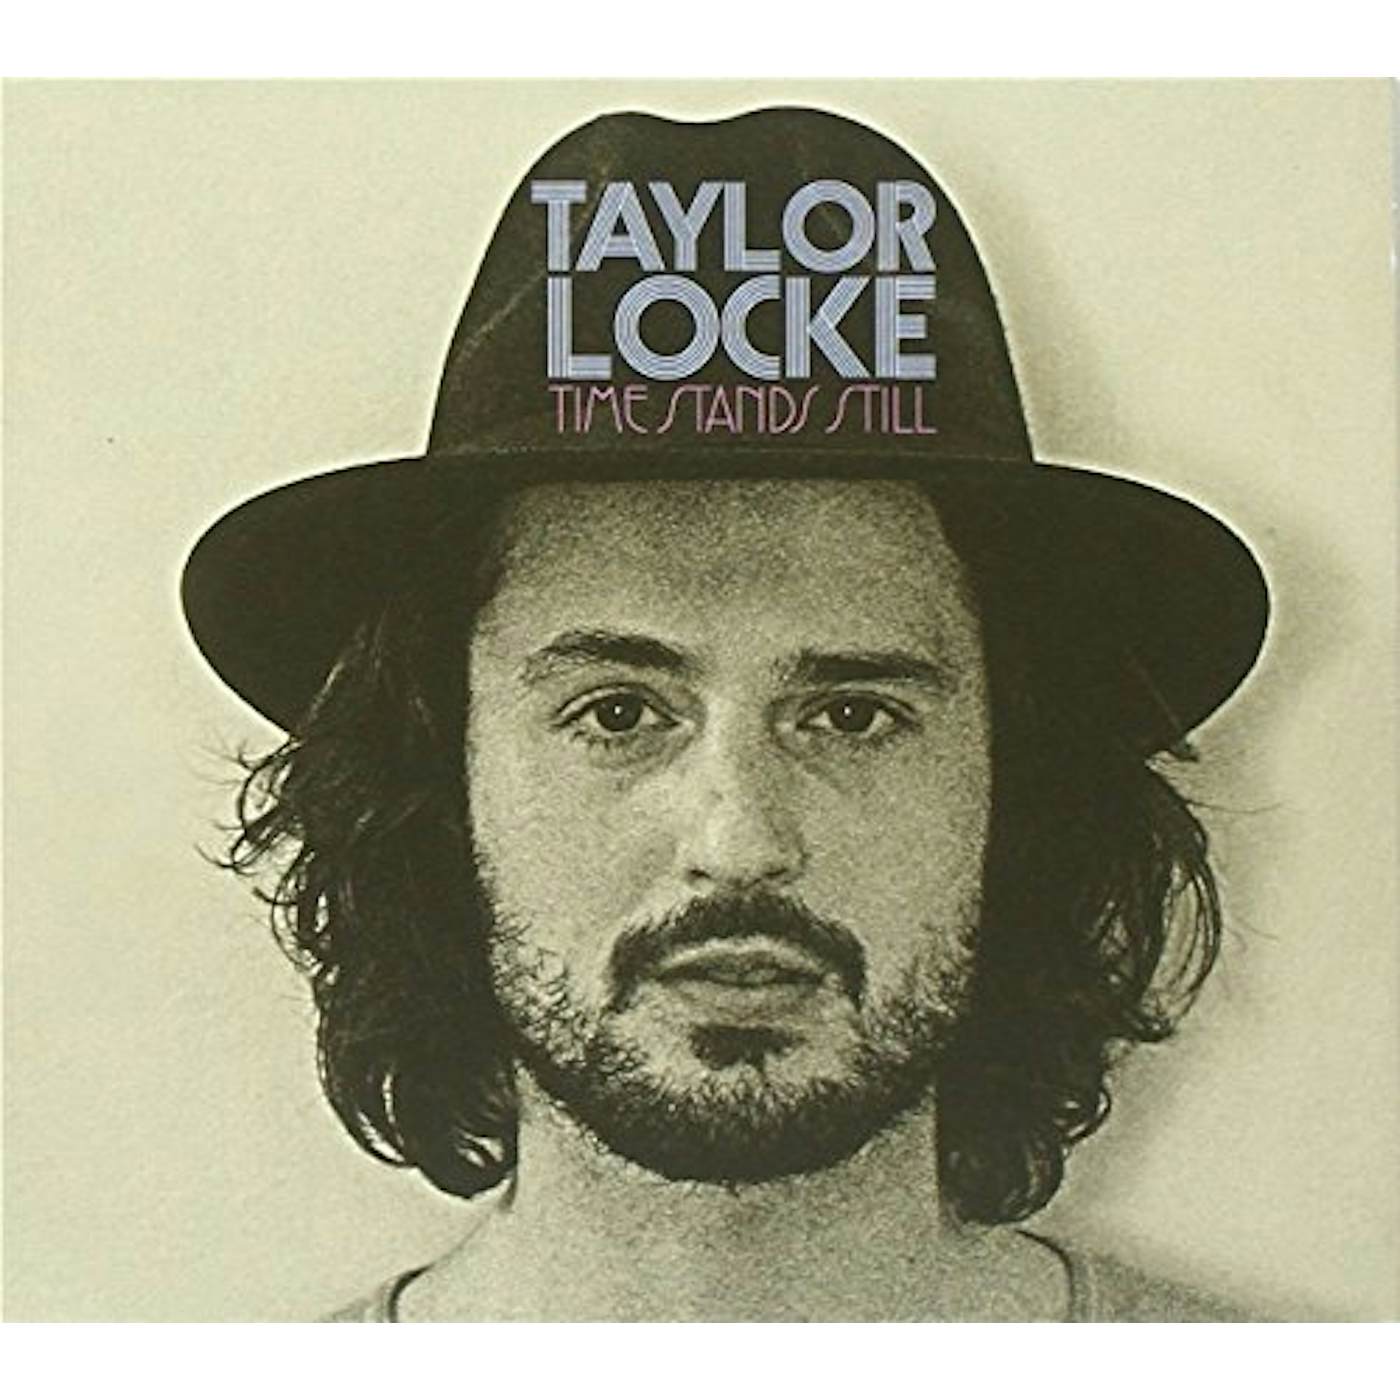 Taylor Locke TIME STANDS STILL CD